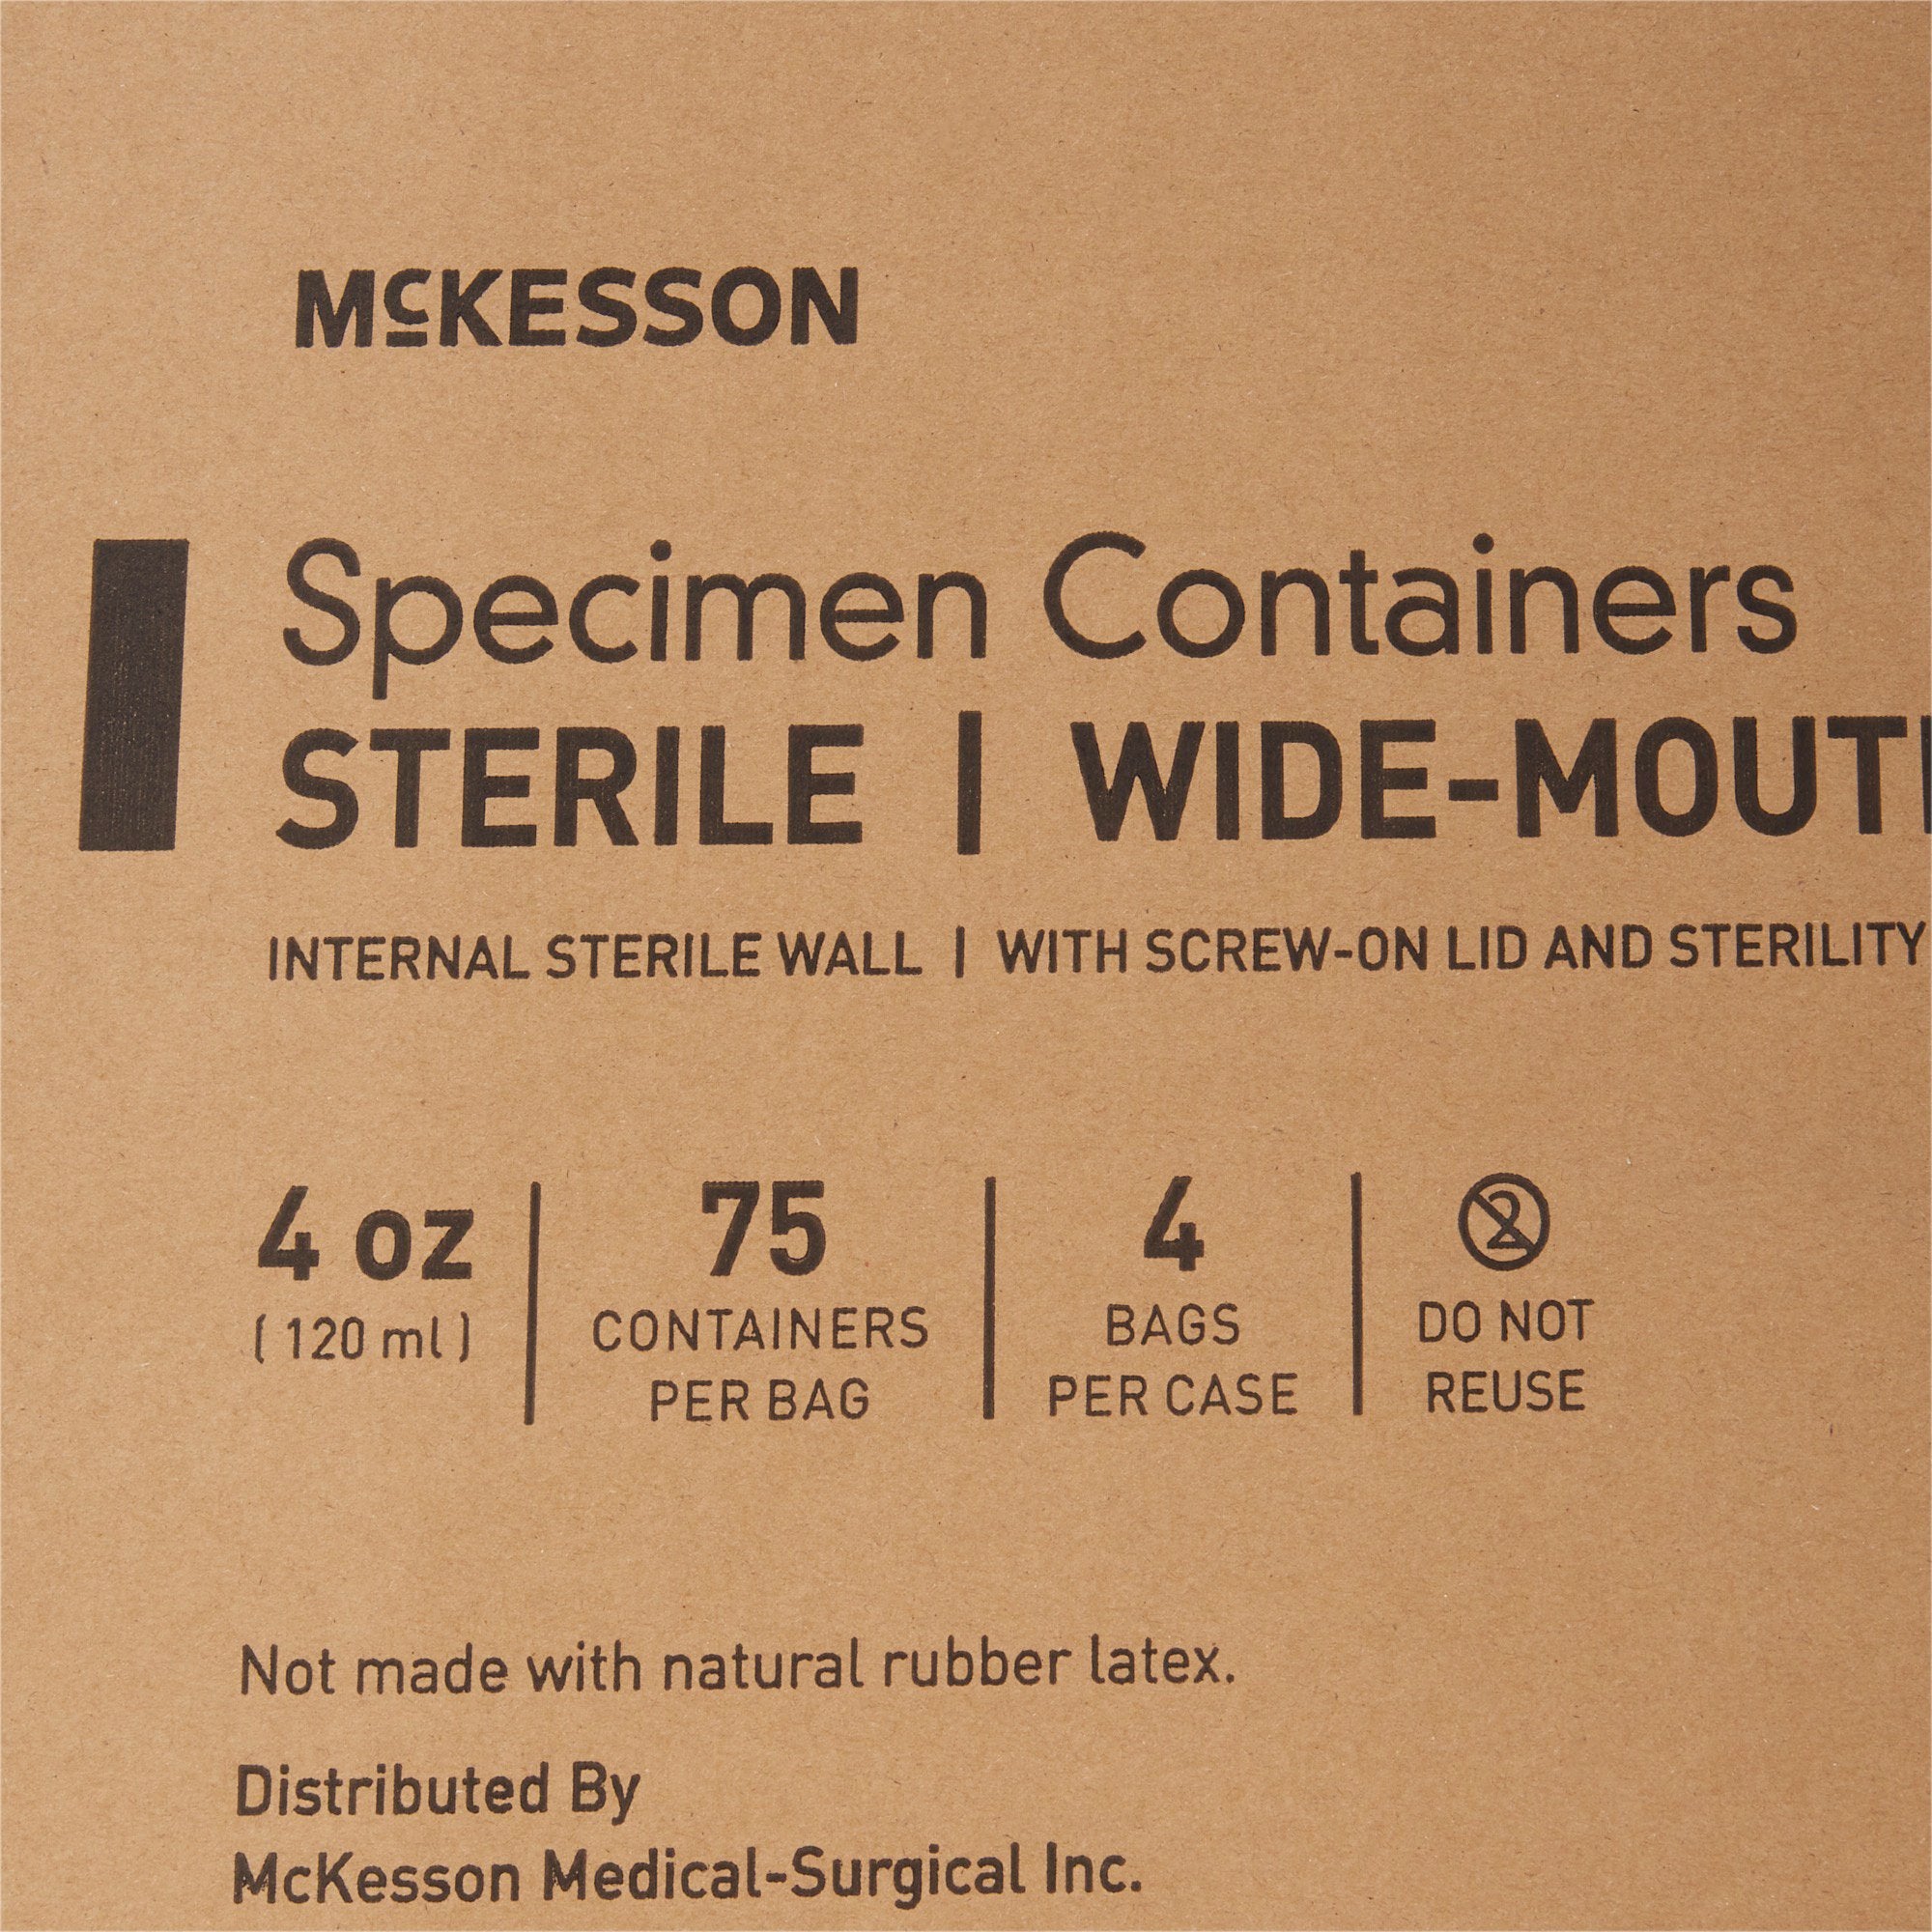 Specimen Container for Pneumatic Tube Systems McKesson 120 mL (4 oz.) Screw Cap Sterile